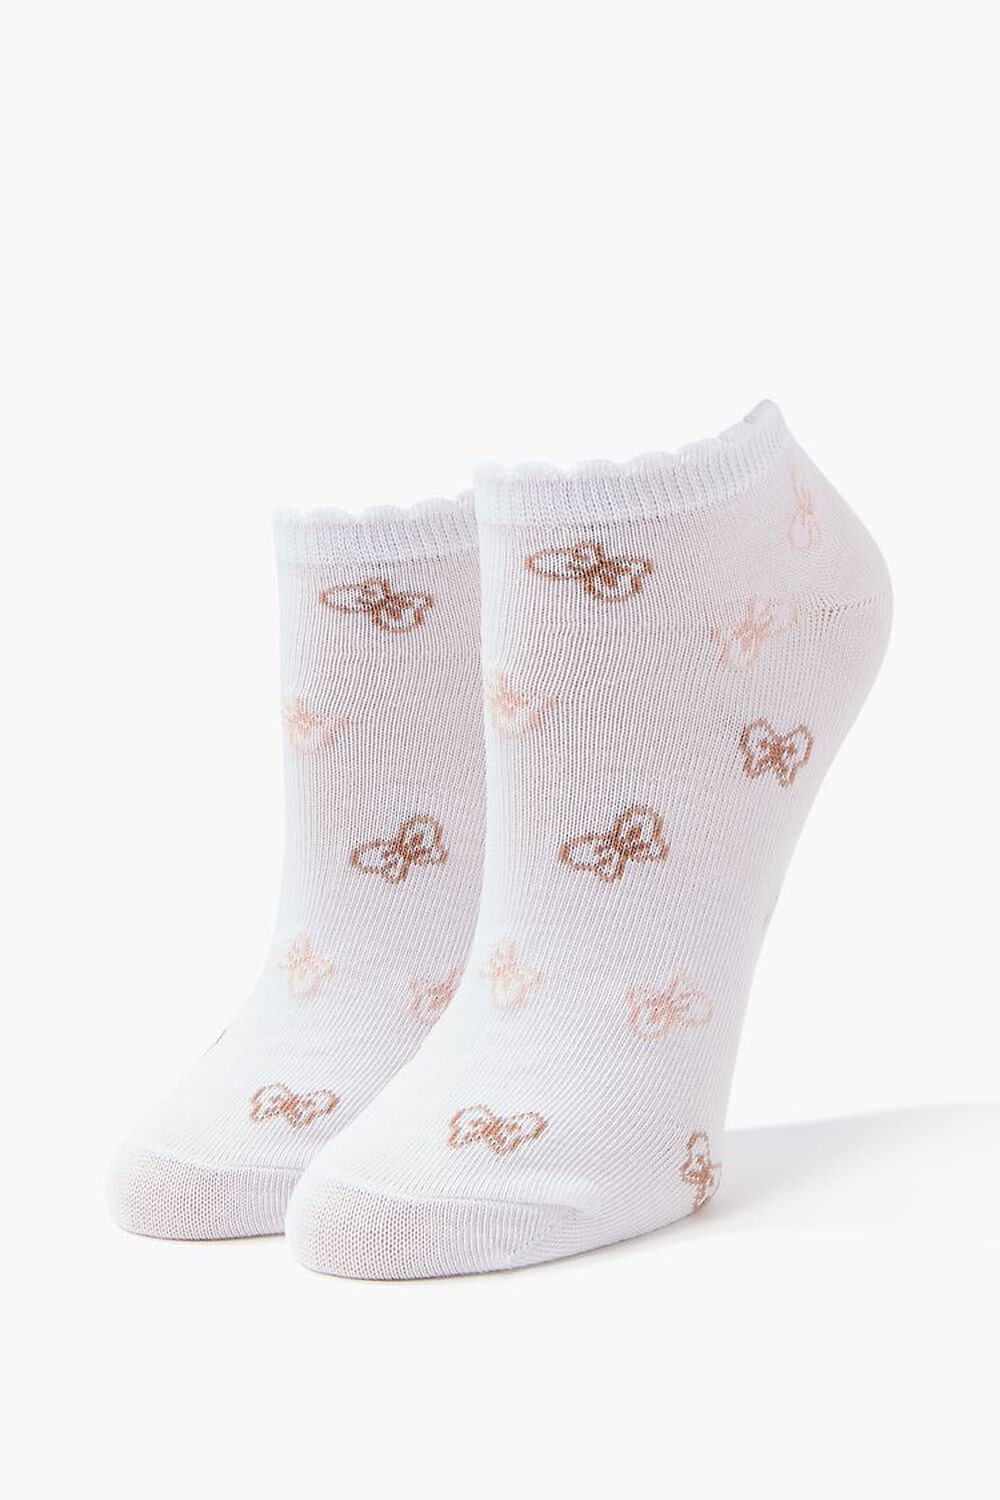 Bow Print Scalloped-Trim Ankle Socks, image 1